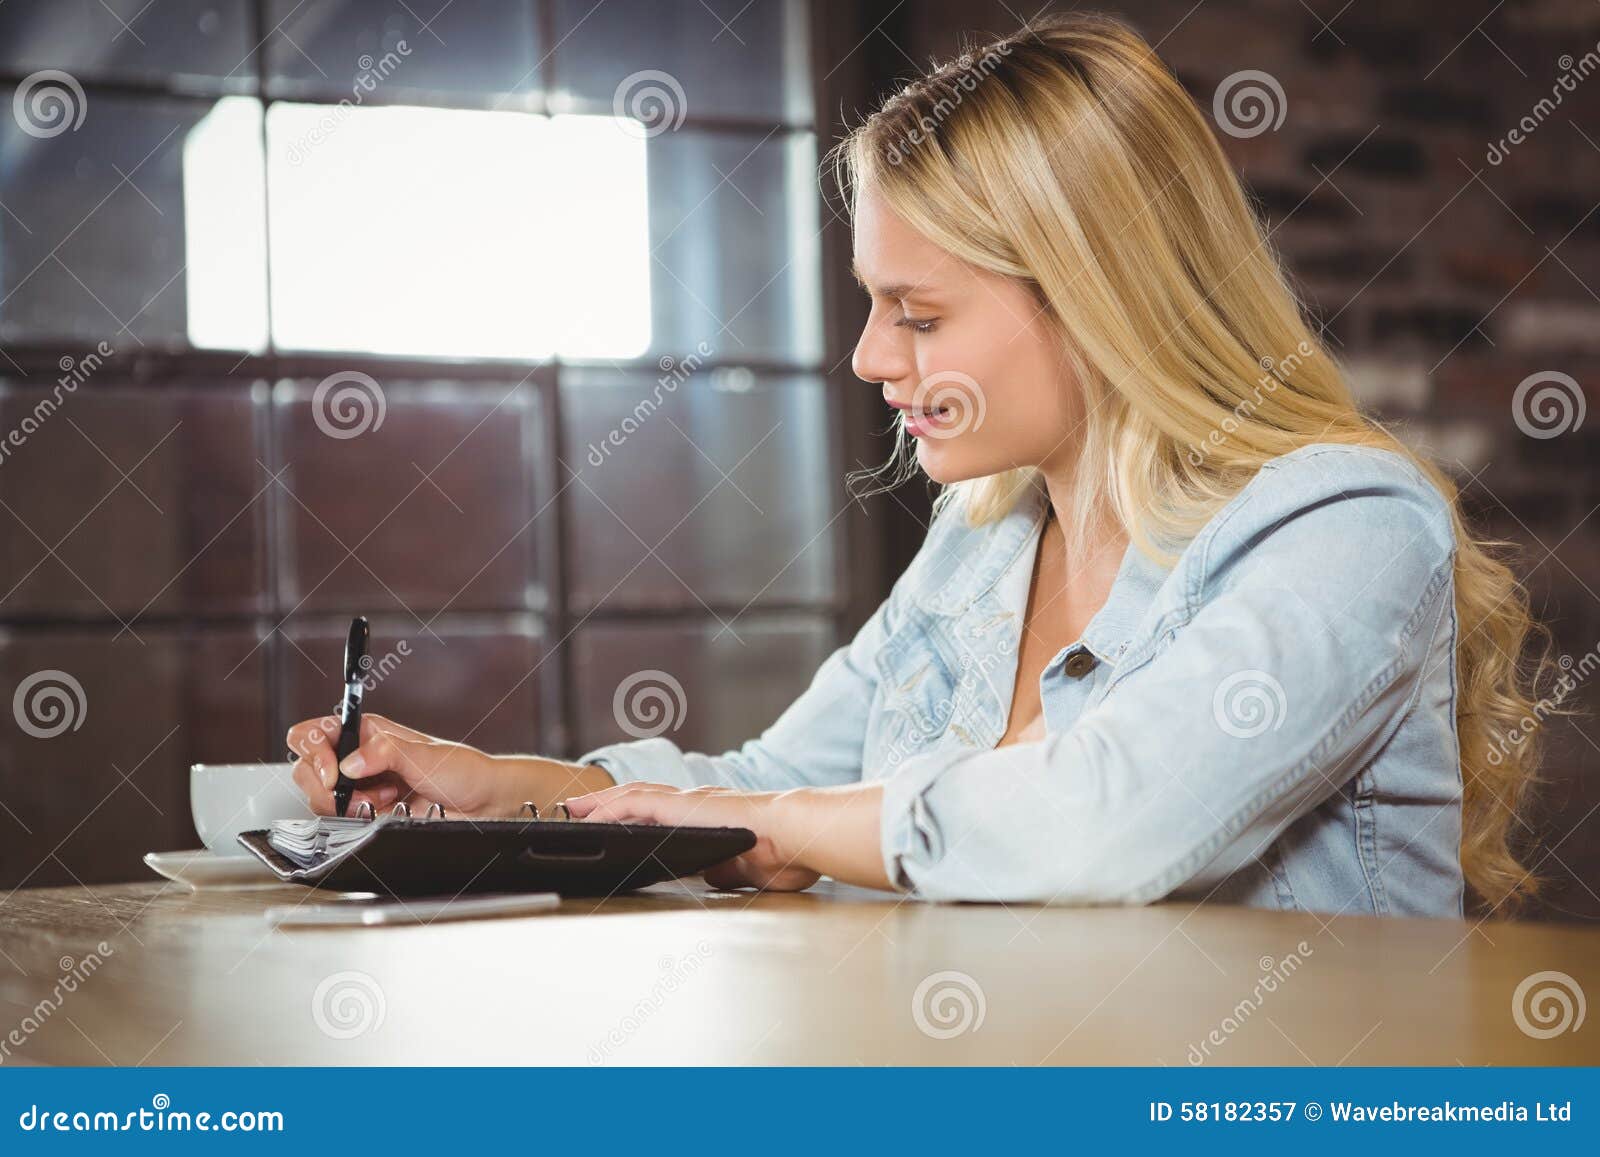 Blonde woman writing in coffee shop - wide 5